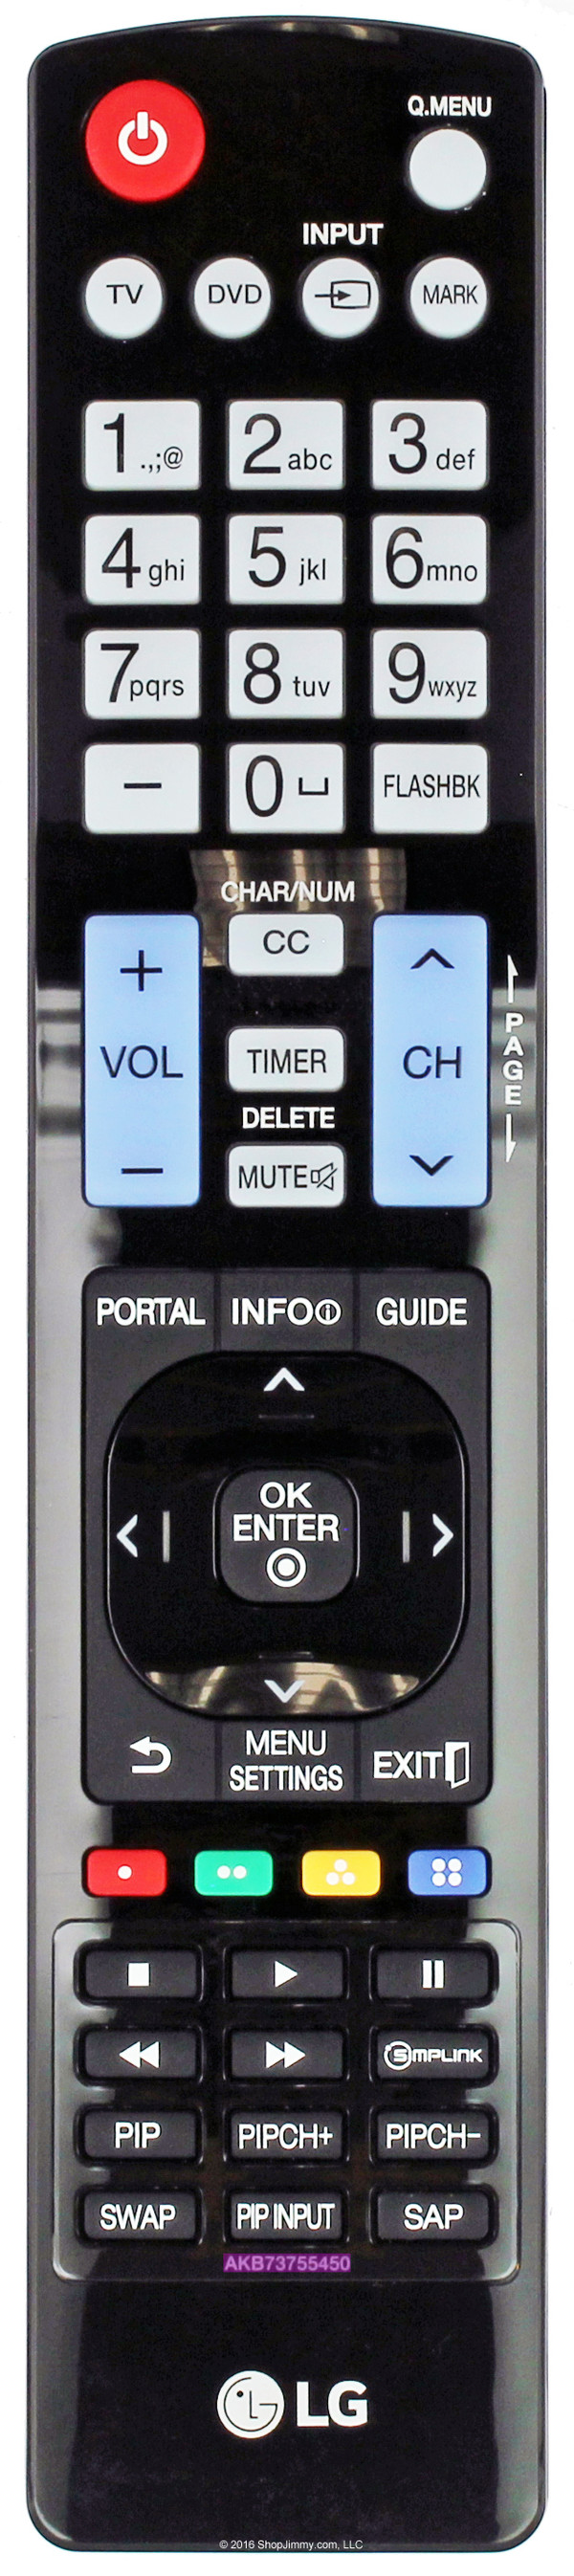 LG AKB73755450 Remote Control - Open Bag